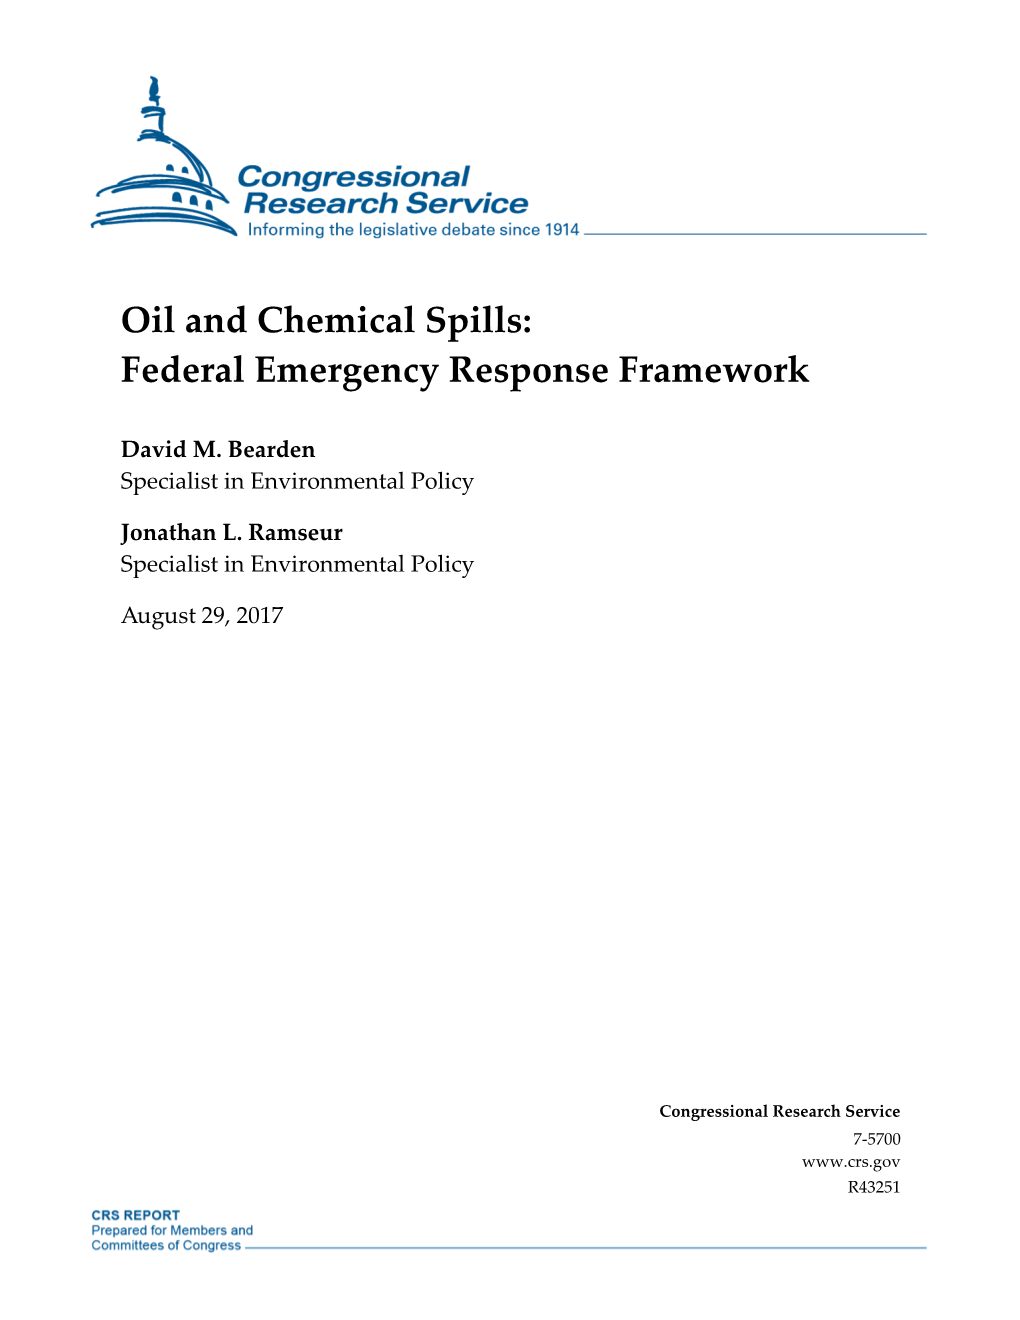 Oil and Chemical Spills: Federal Emergency Response Framework